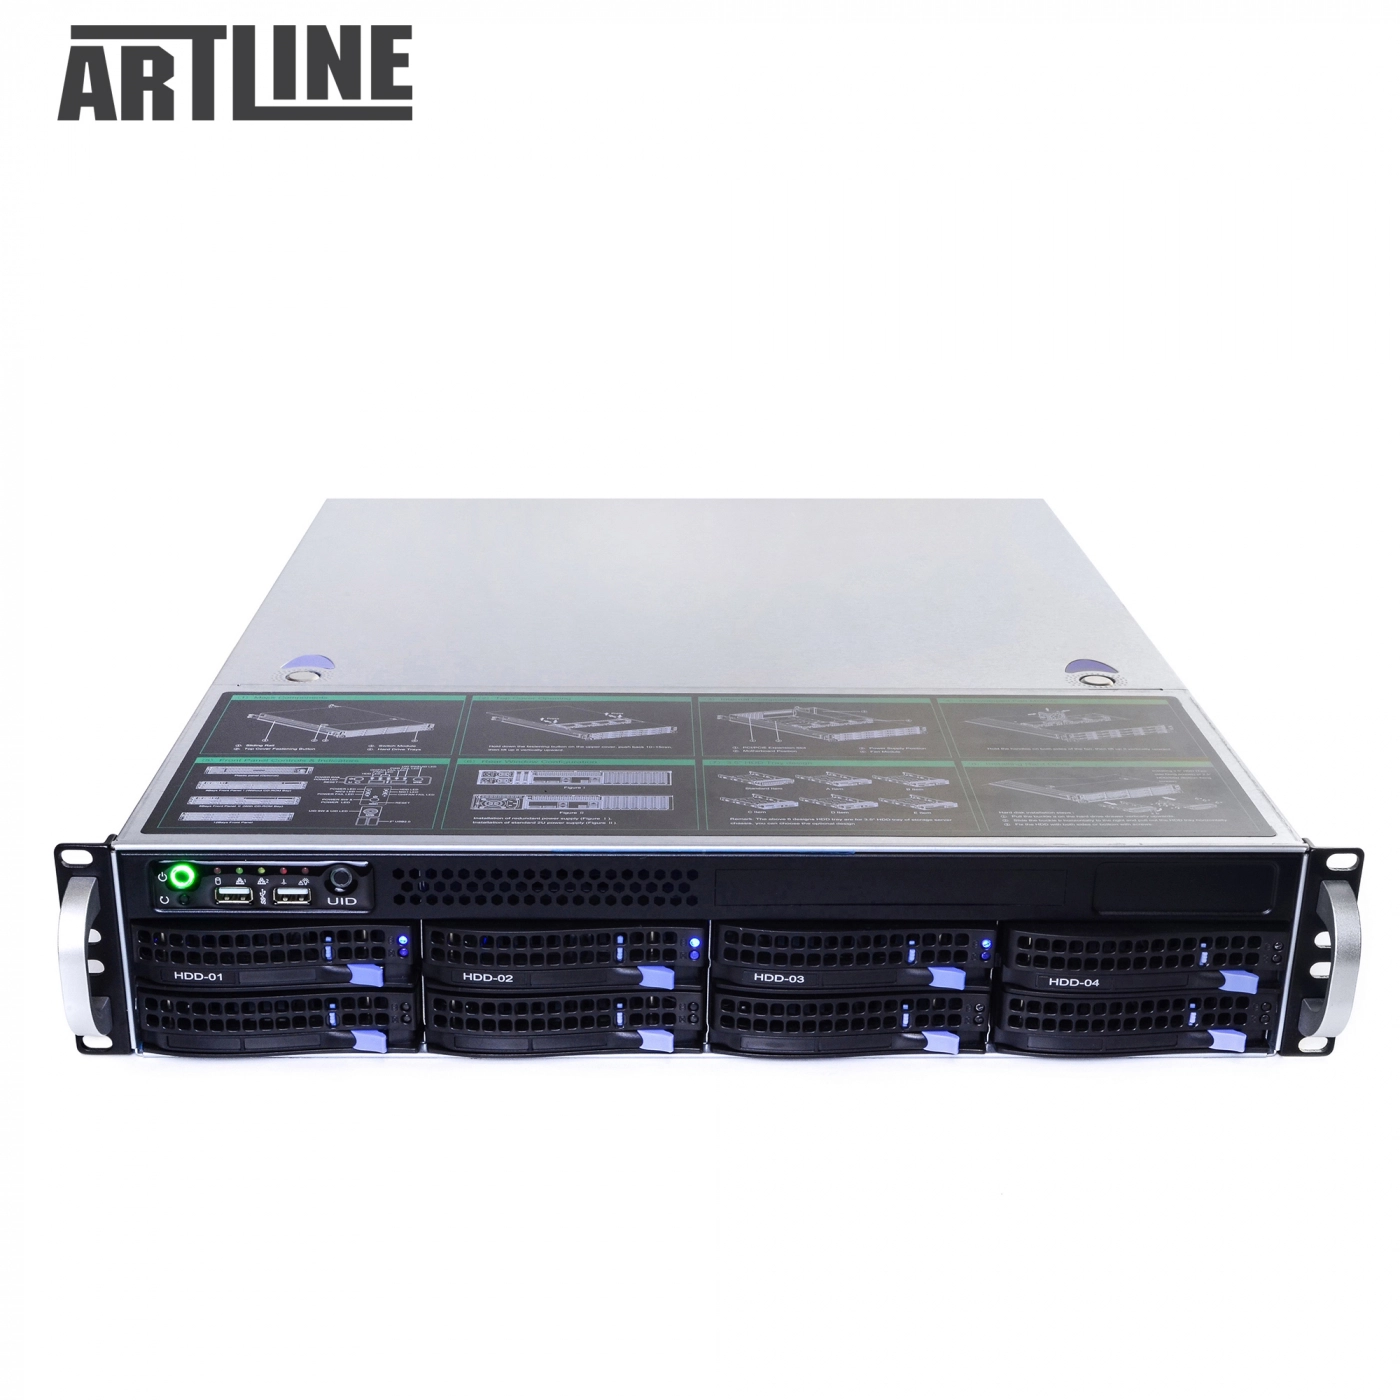 Купити Сервер ARTLINE Business R35v28 - фото 10